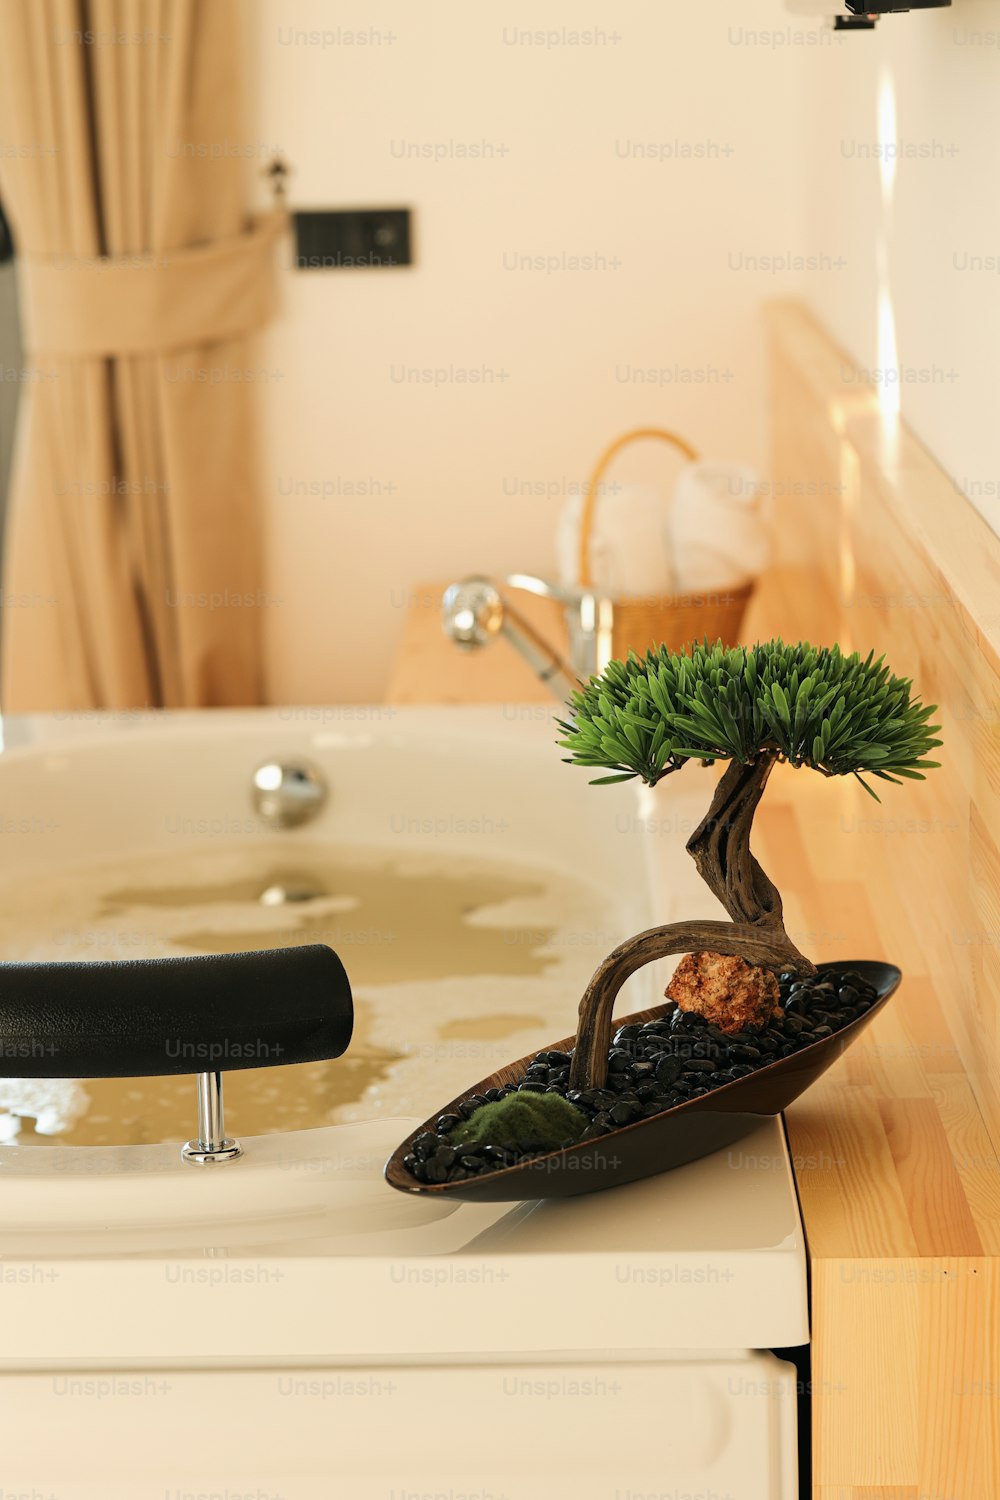 a bonsai tree in a bathroom sink